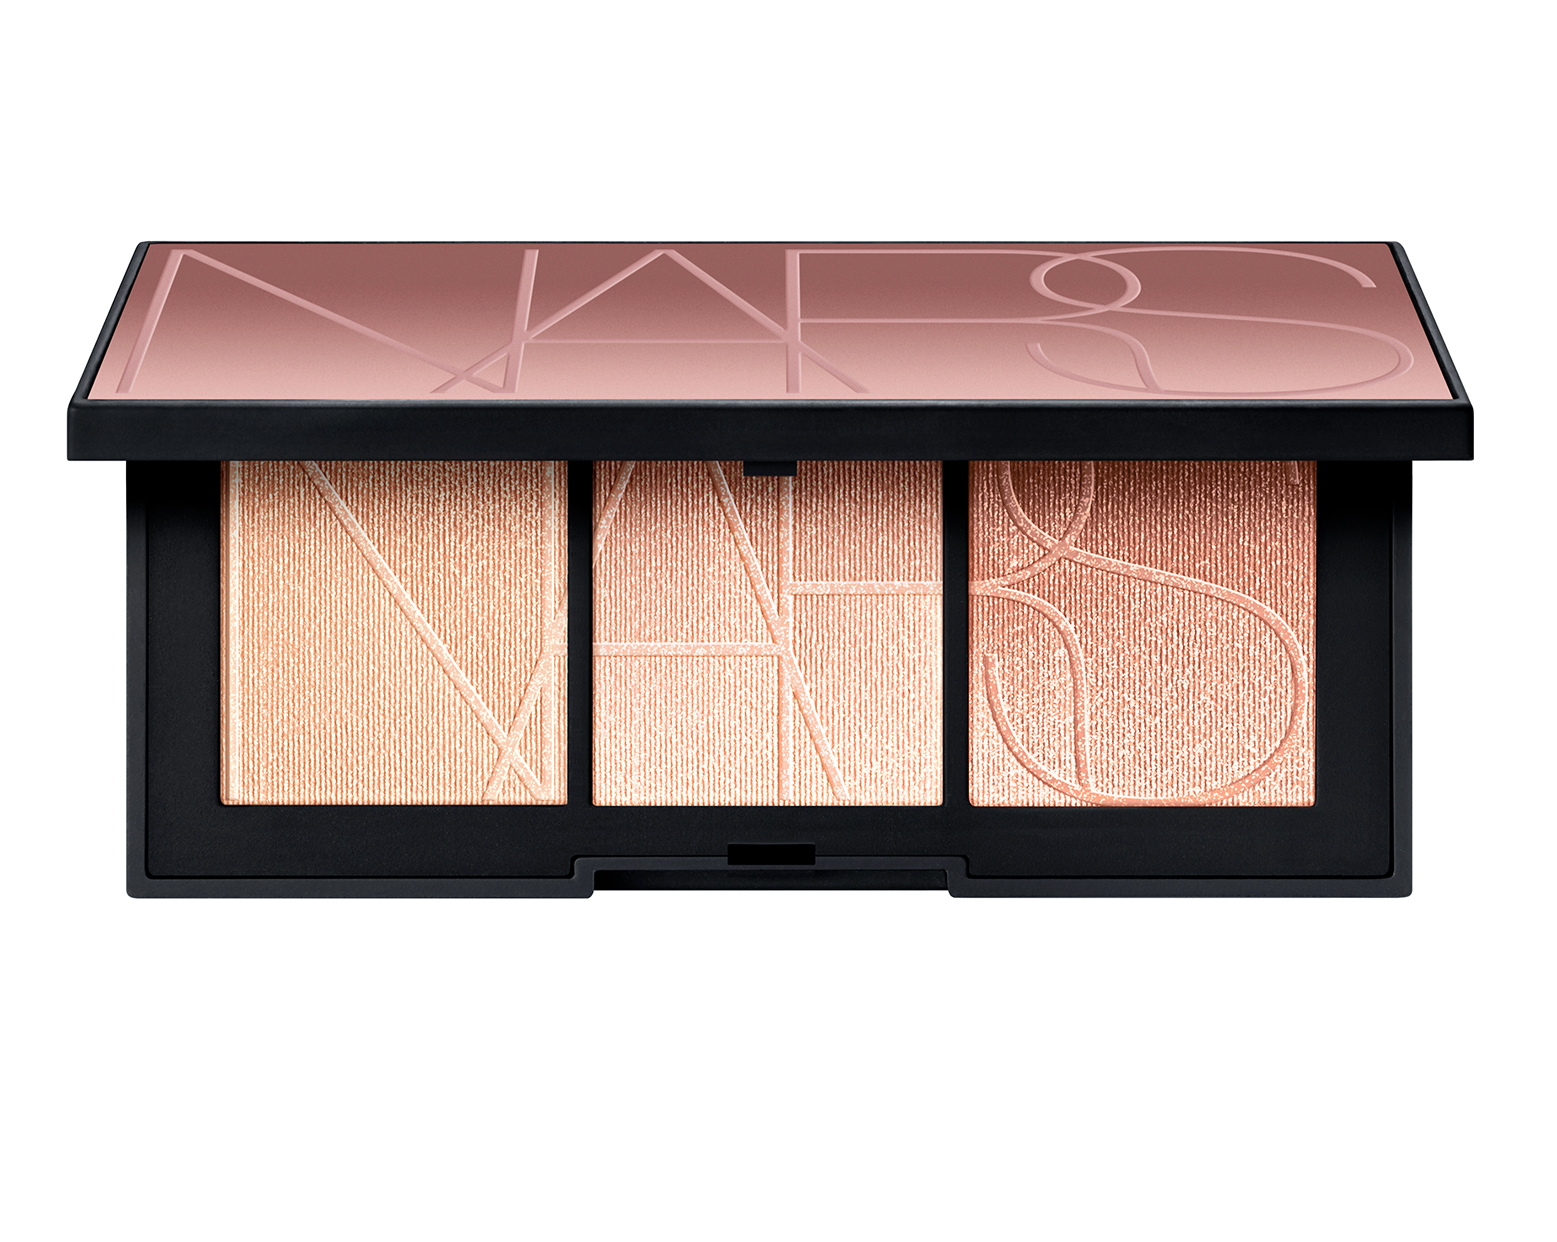 NARS cosmetics makeup & skincare products